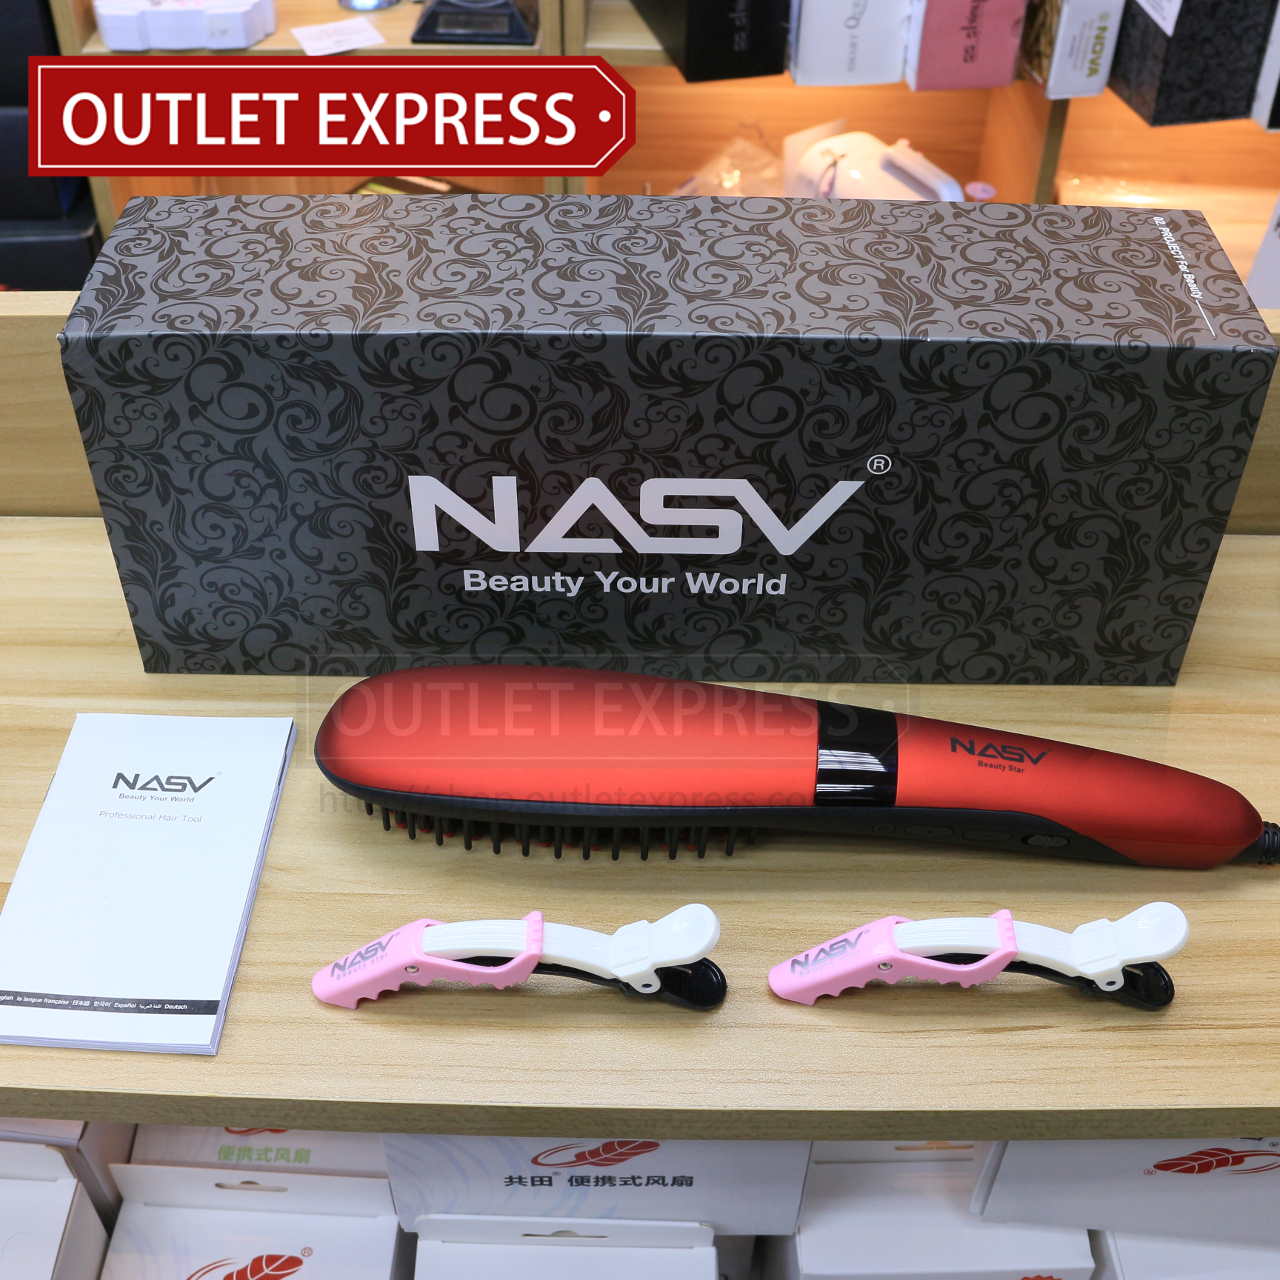 NASV-300 負離子直髮梳 配件- Outlet Express HK 生活百貨城實拍相片